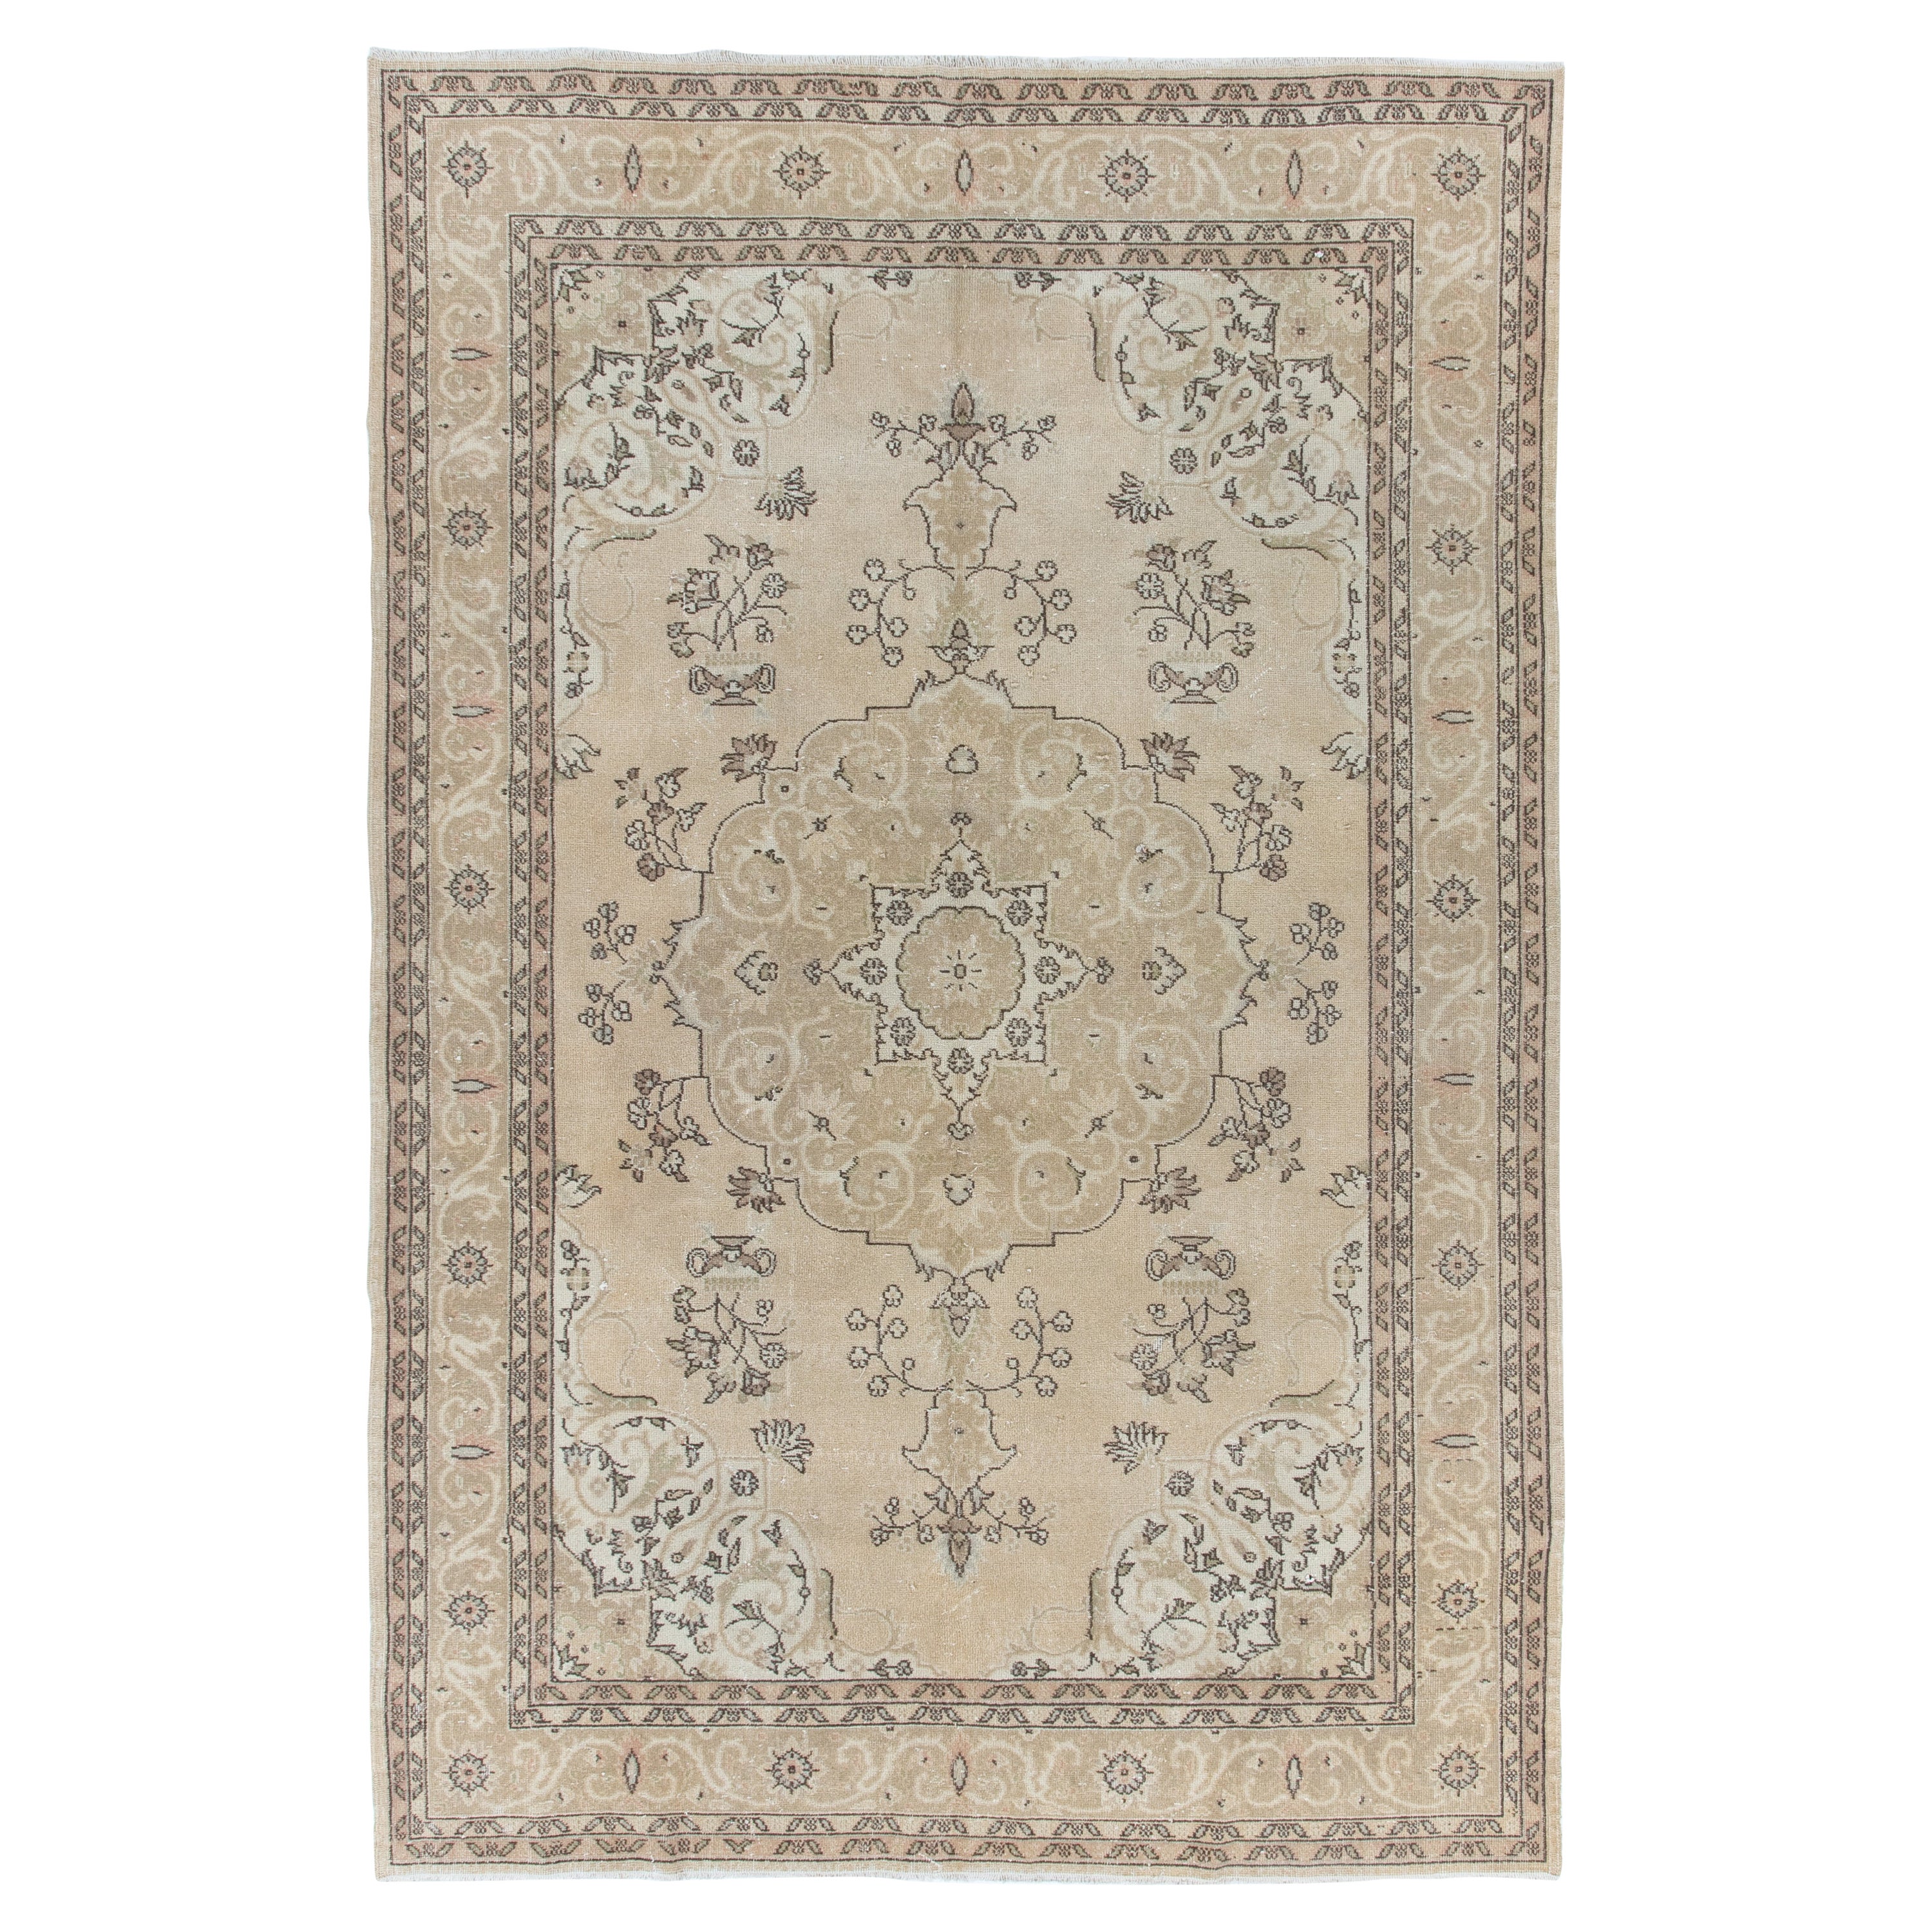 7.2x11 Ft Vintage Anatolian Rug in Neutral Colors, Beige Handmade Oushak Carpet